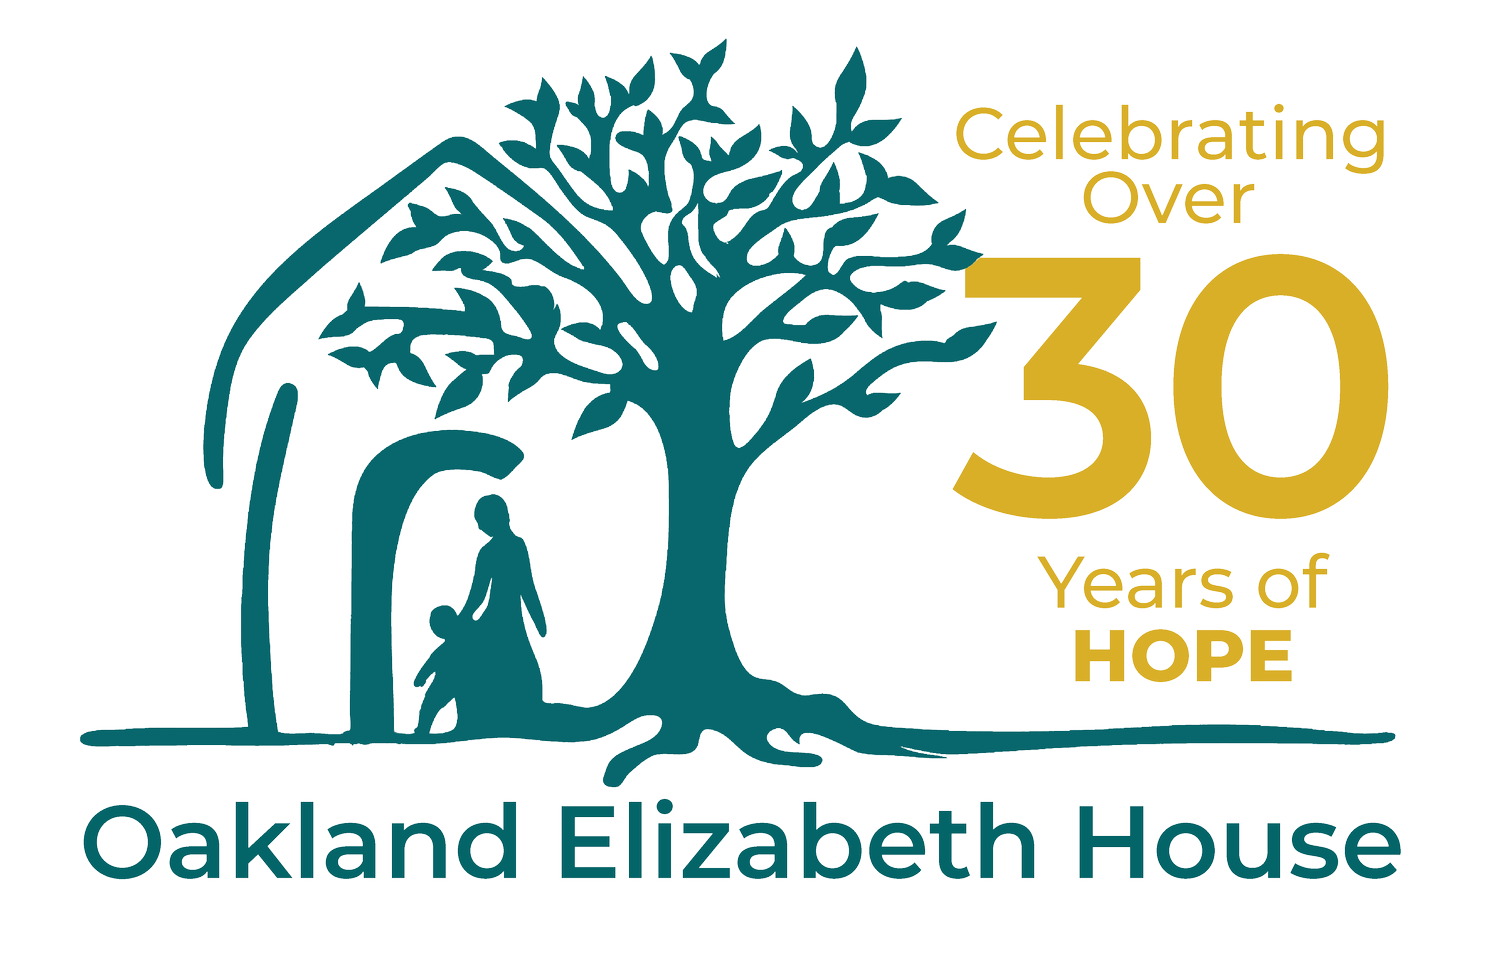 Oakland Elizabeth House